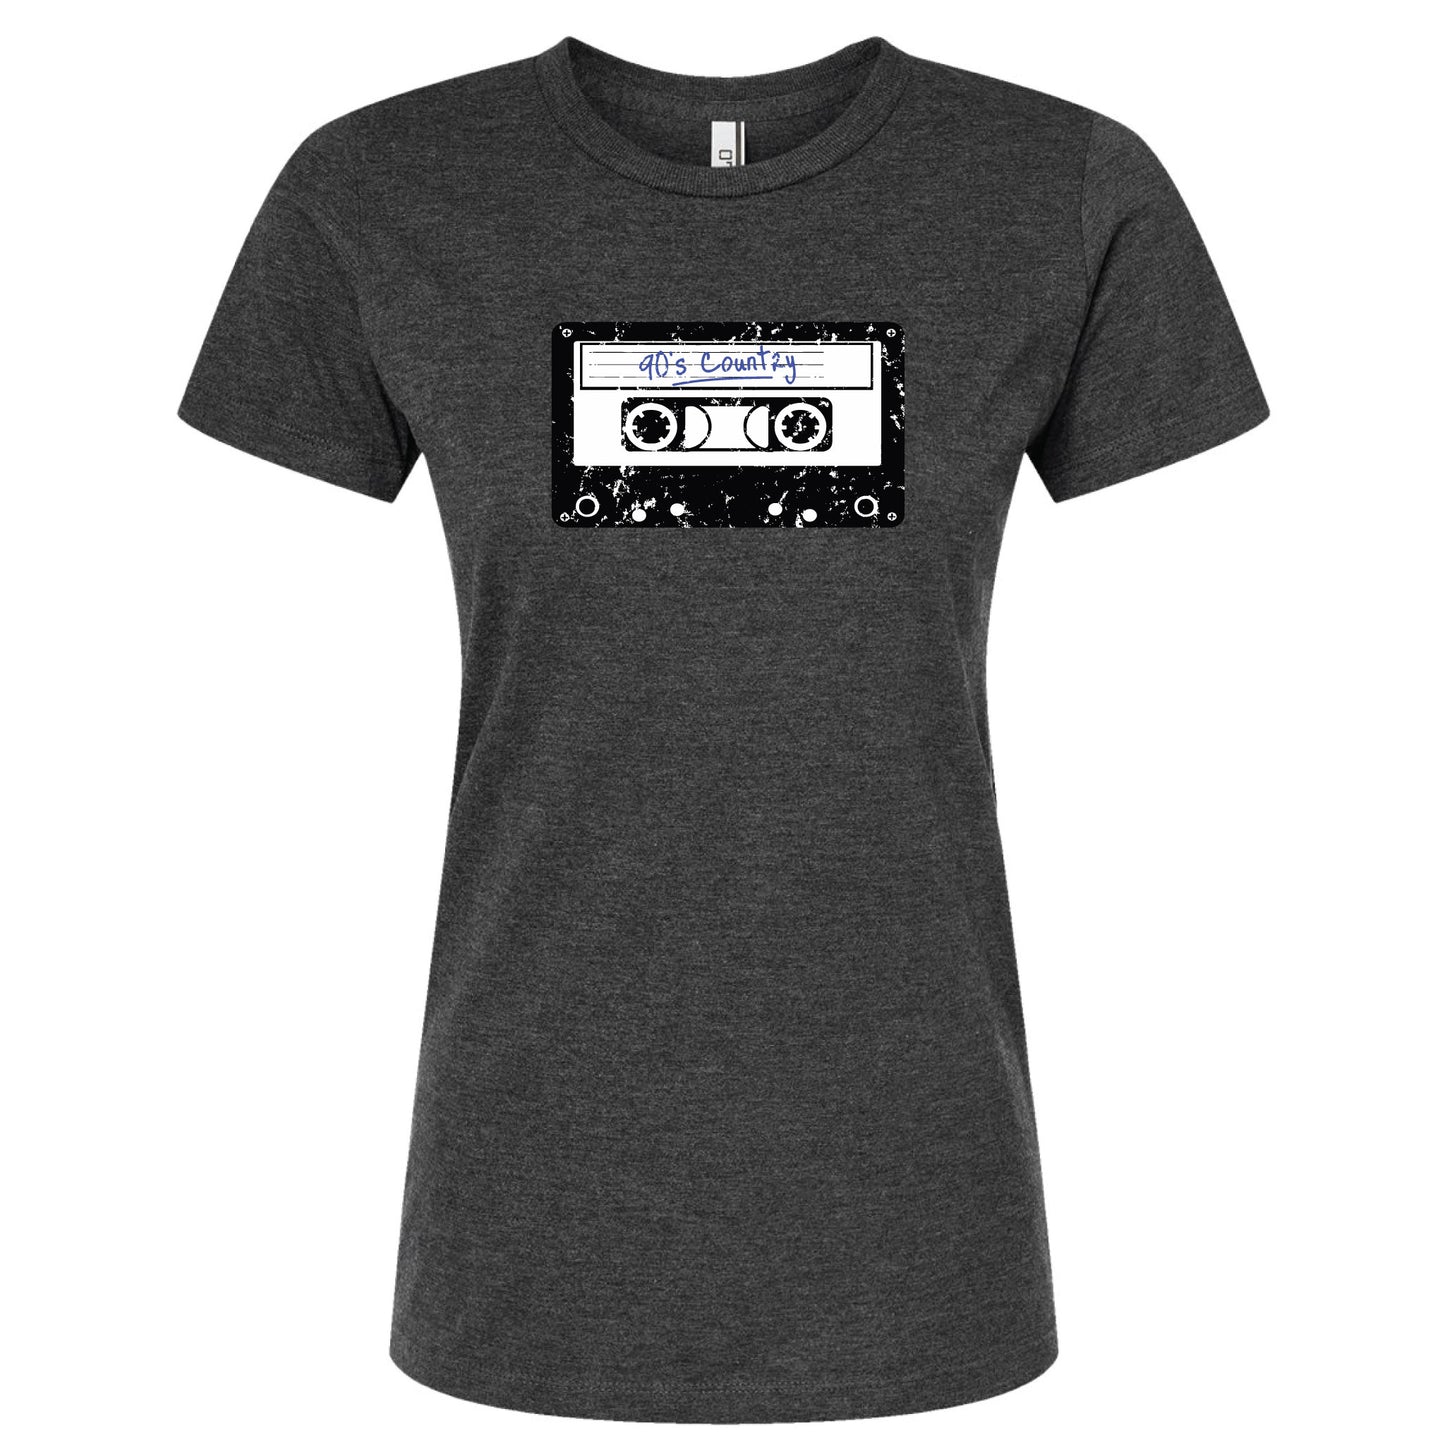 90s Country Cassette Women's Slim Fit T-Shirt